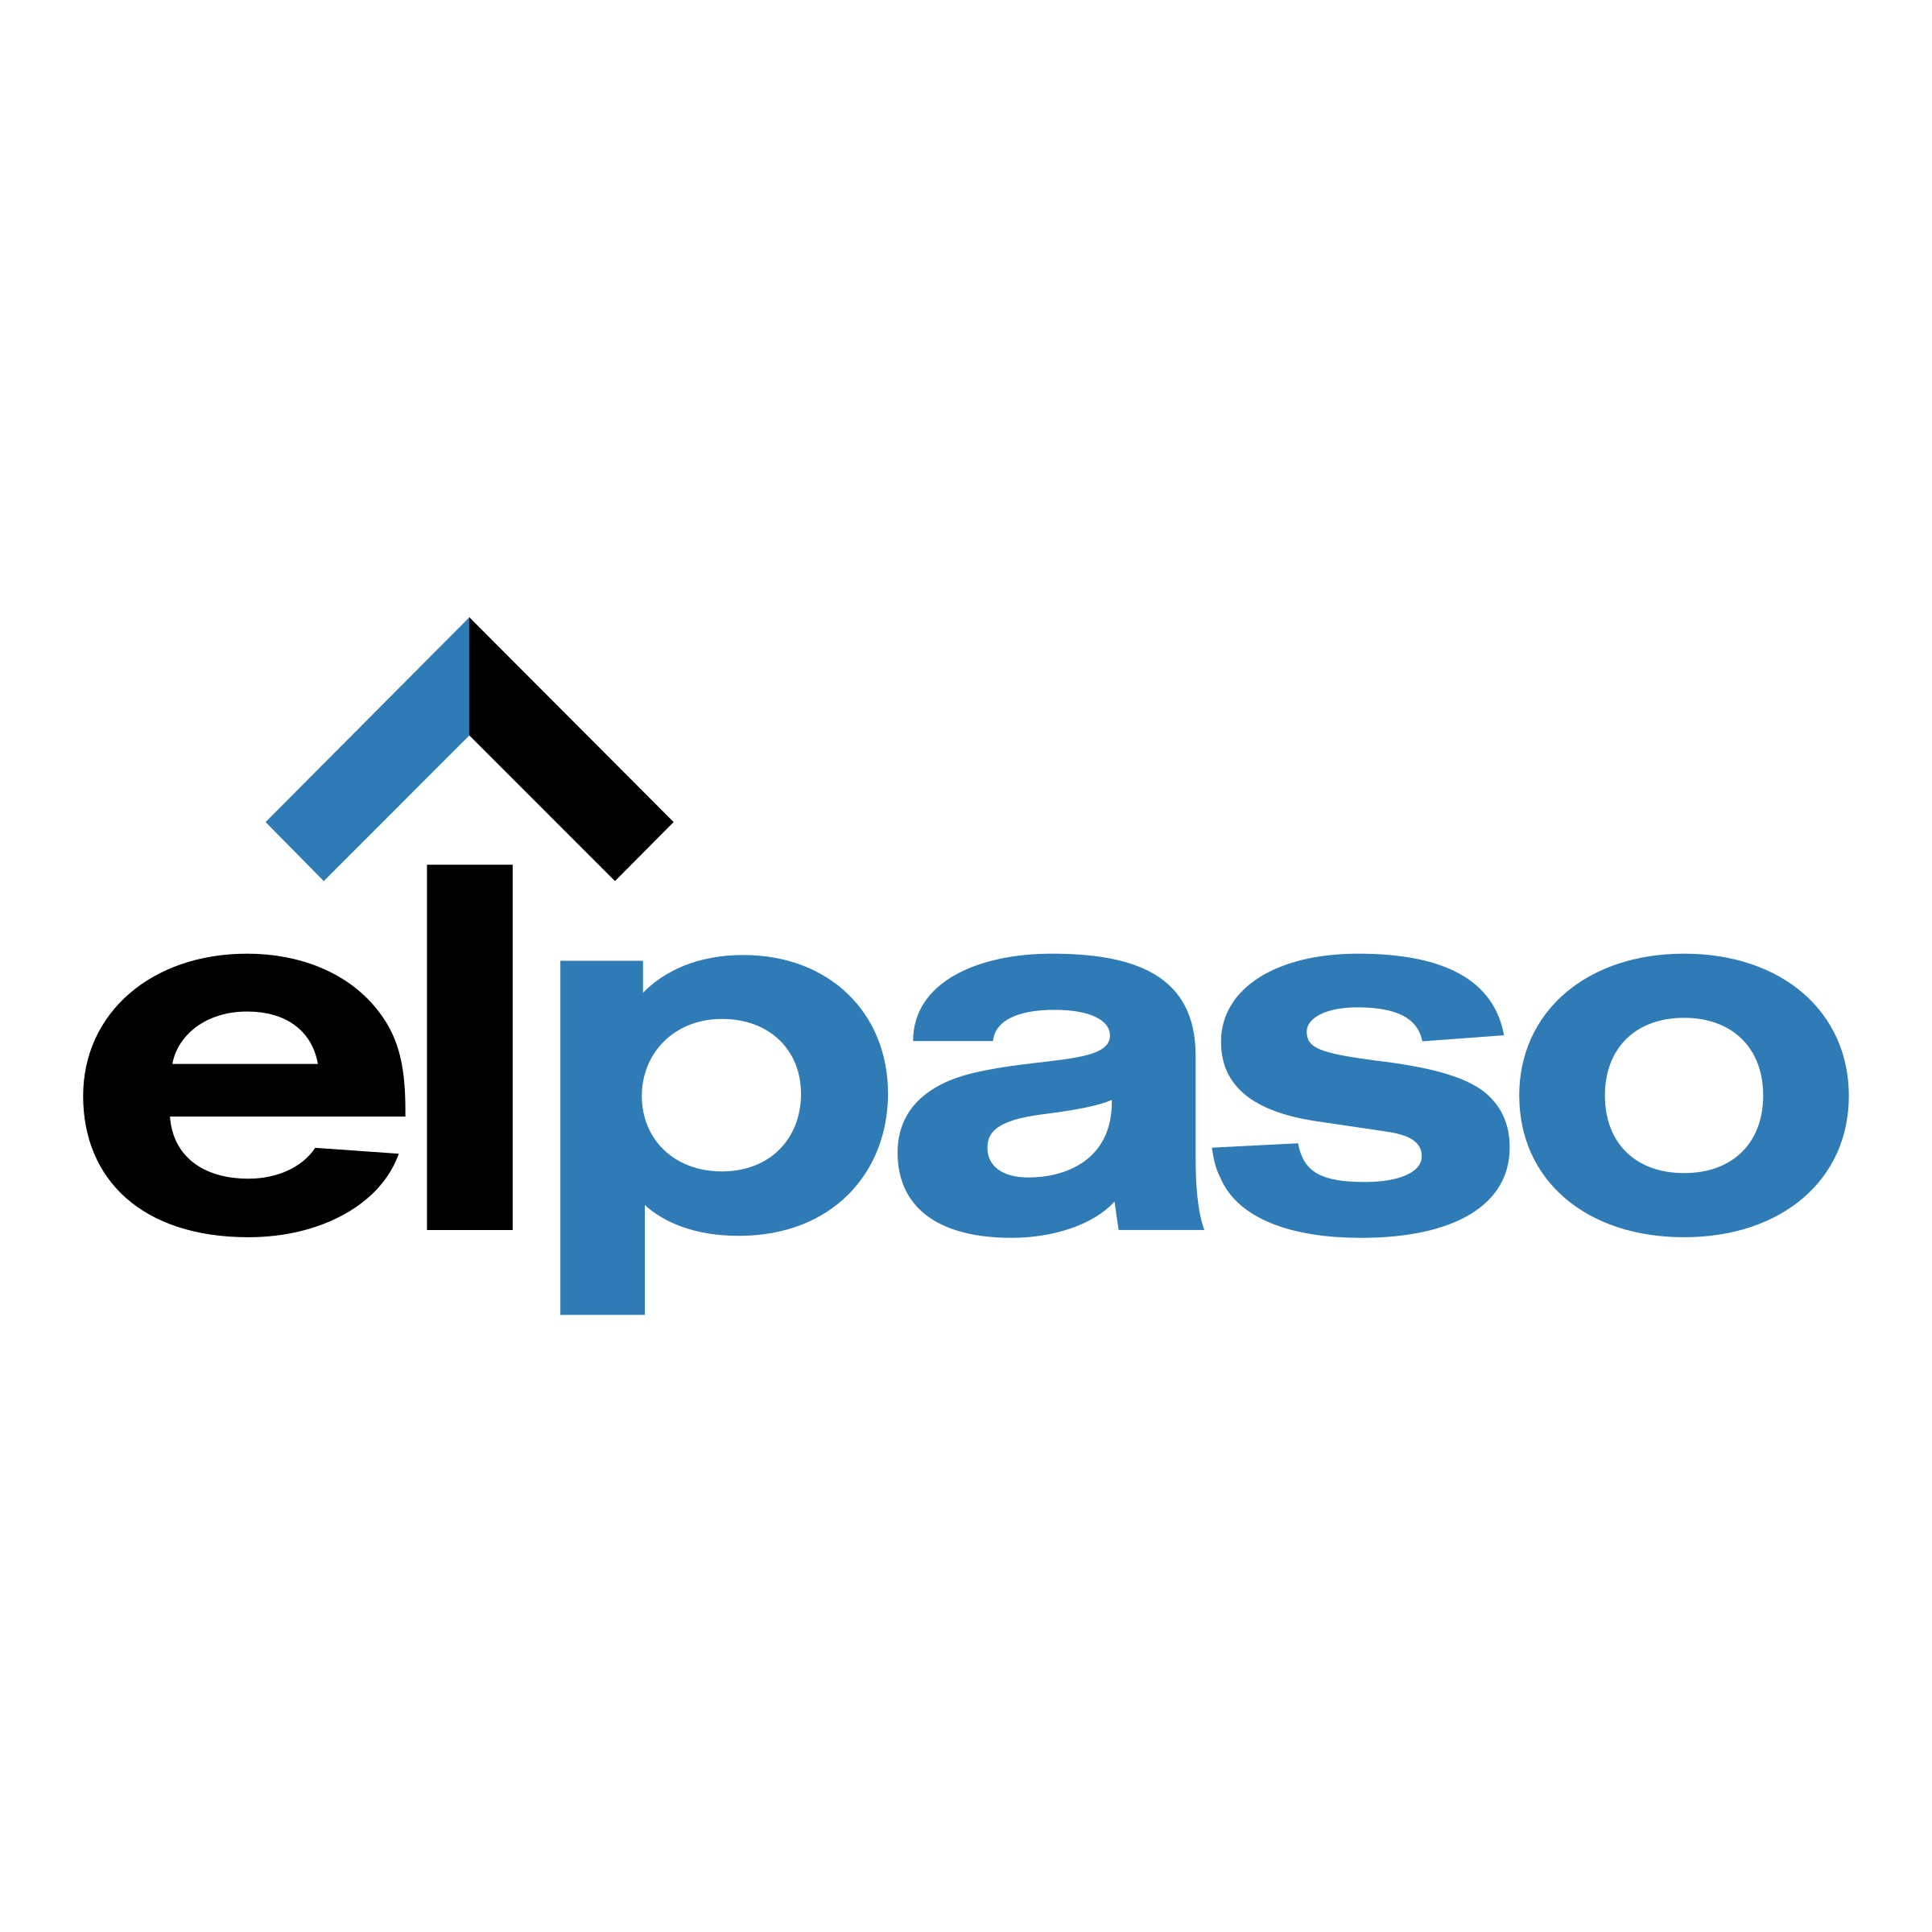 1 Energy Logo - El Paso Energy Logo PNG Transparent & SVG Vector - Freebie Supply